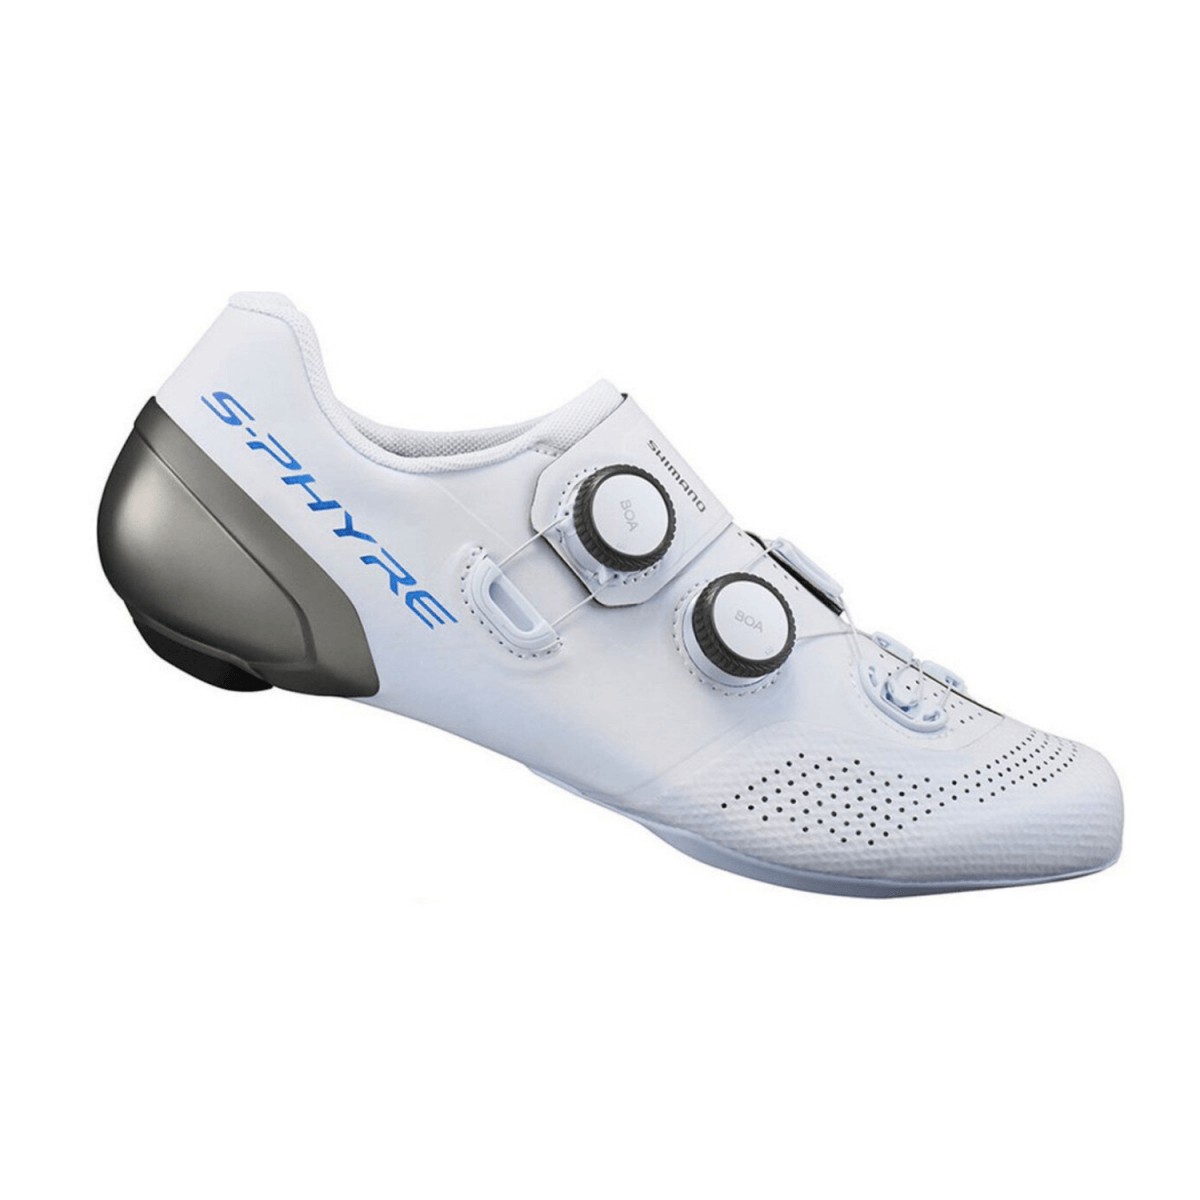 Sapatos Shimano RC902 S-PHYRE Brancos, Tamanho 42 - EUR